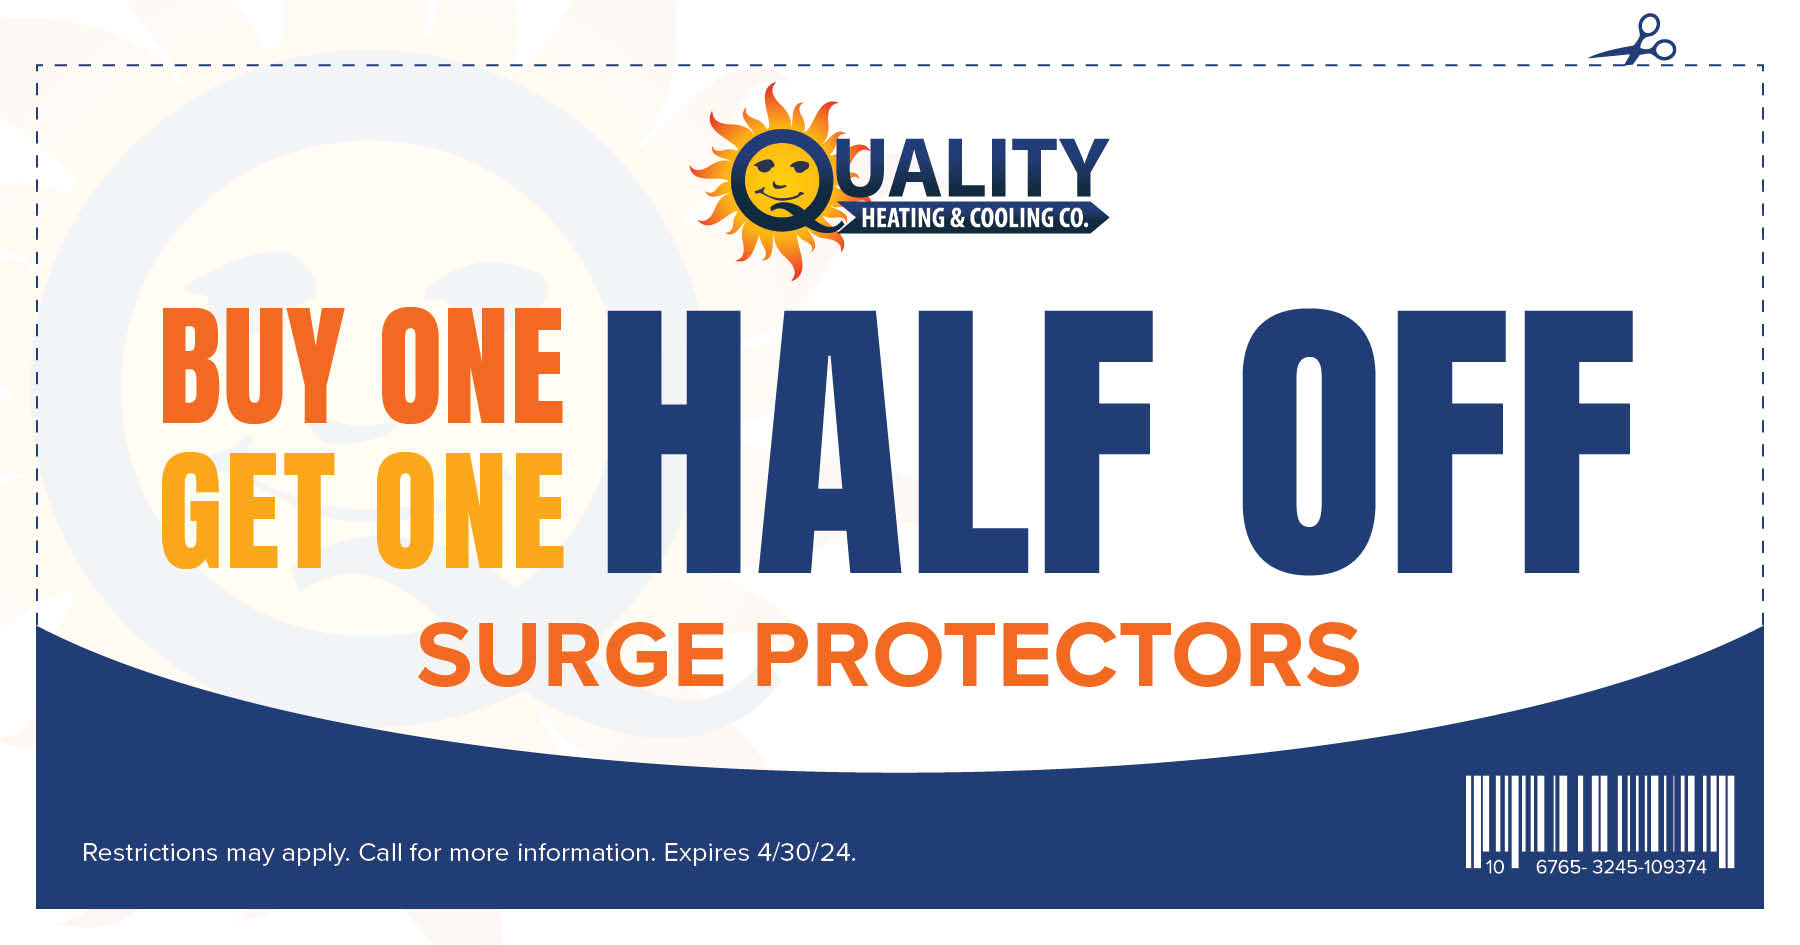 buy one get one half off surge protectors!